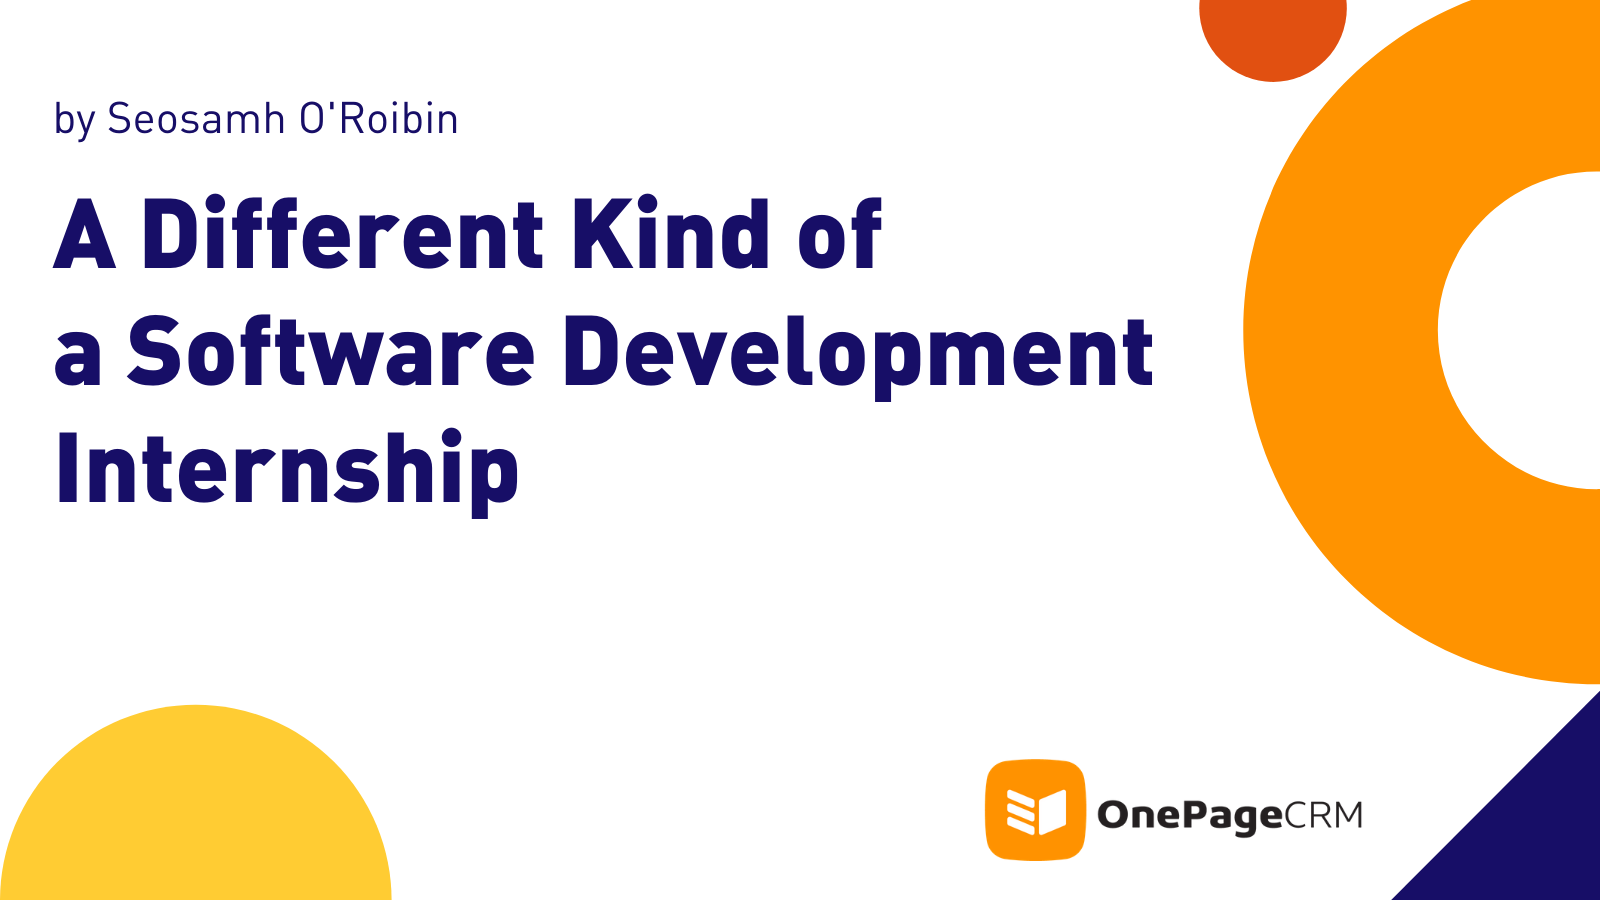 A Different Kind of Software Development Internship